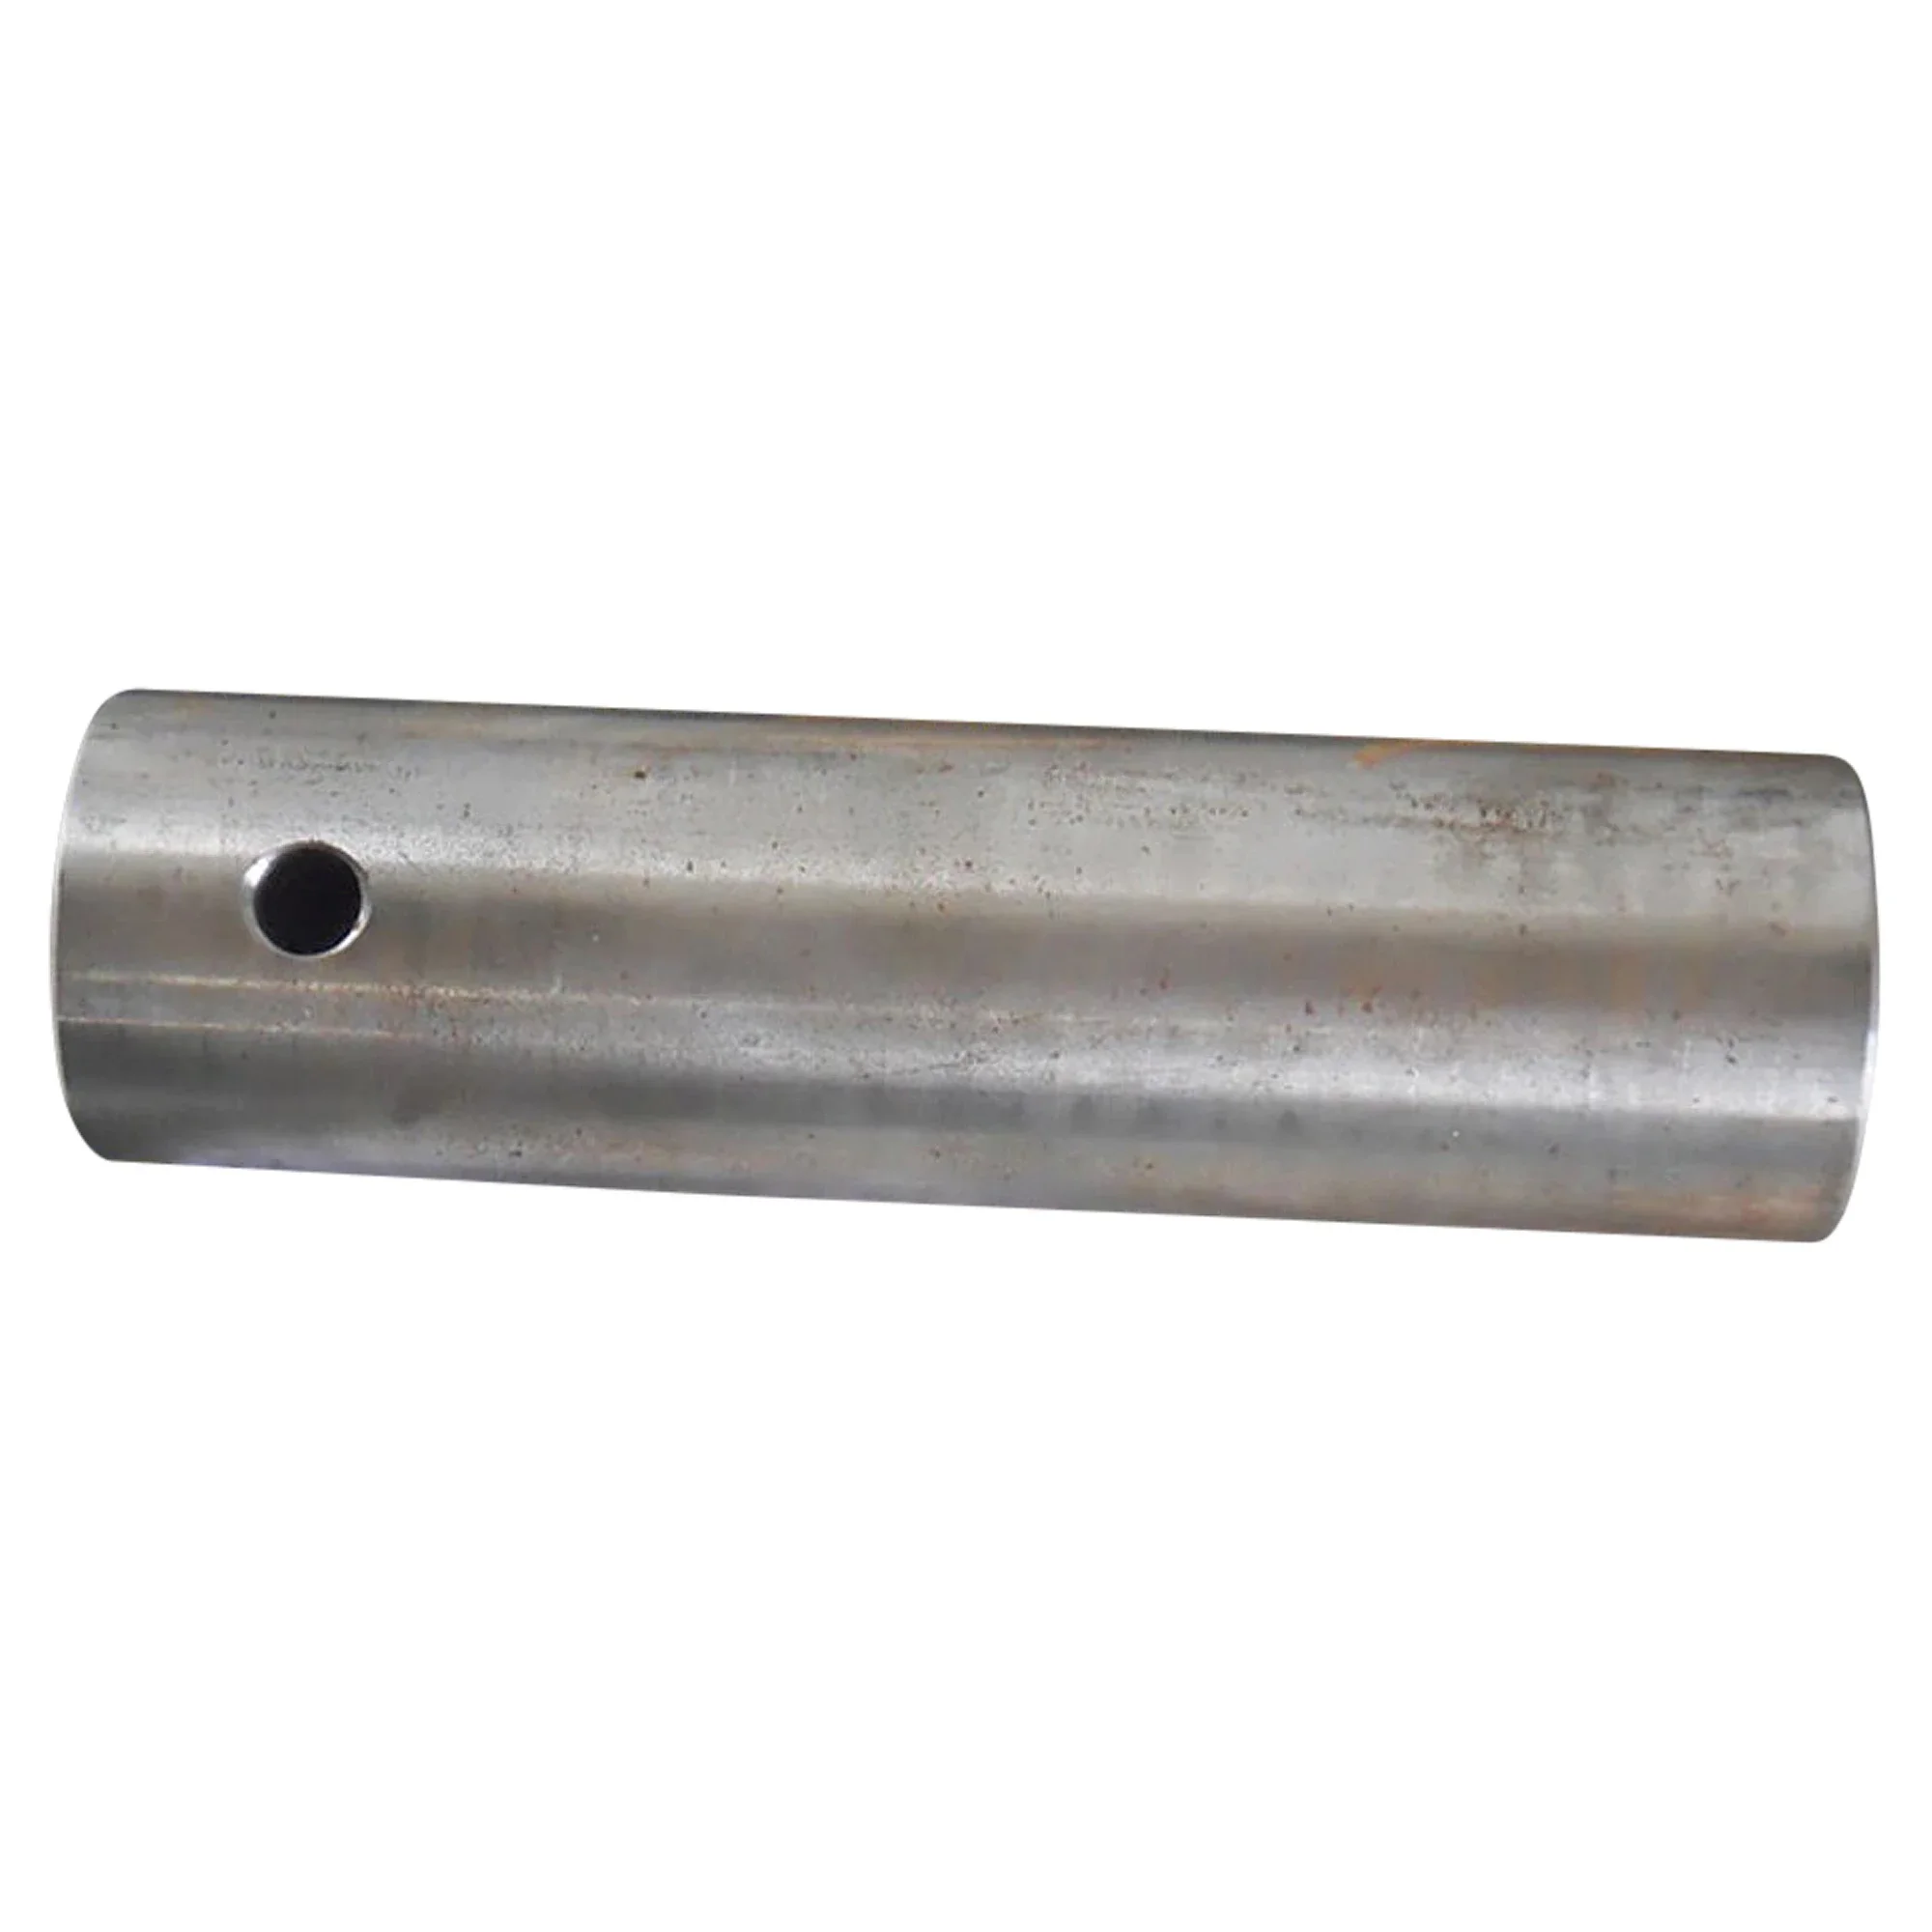 Wastebuilt® Replacement for Heil Pin Upper Hoist Cylinder